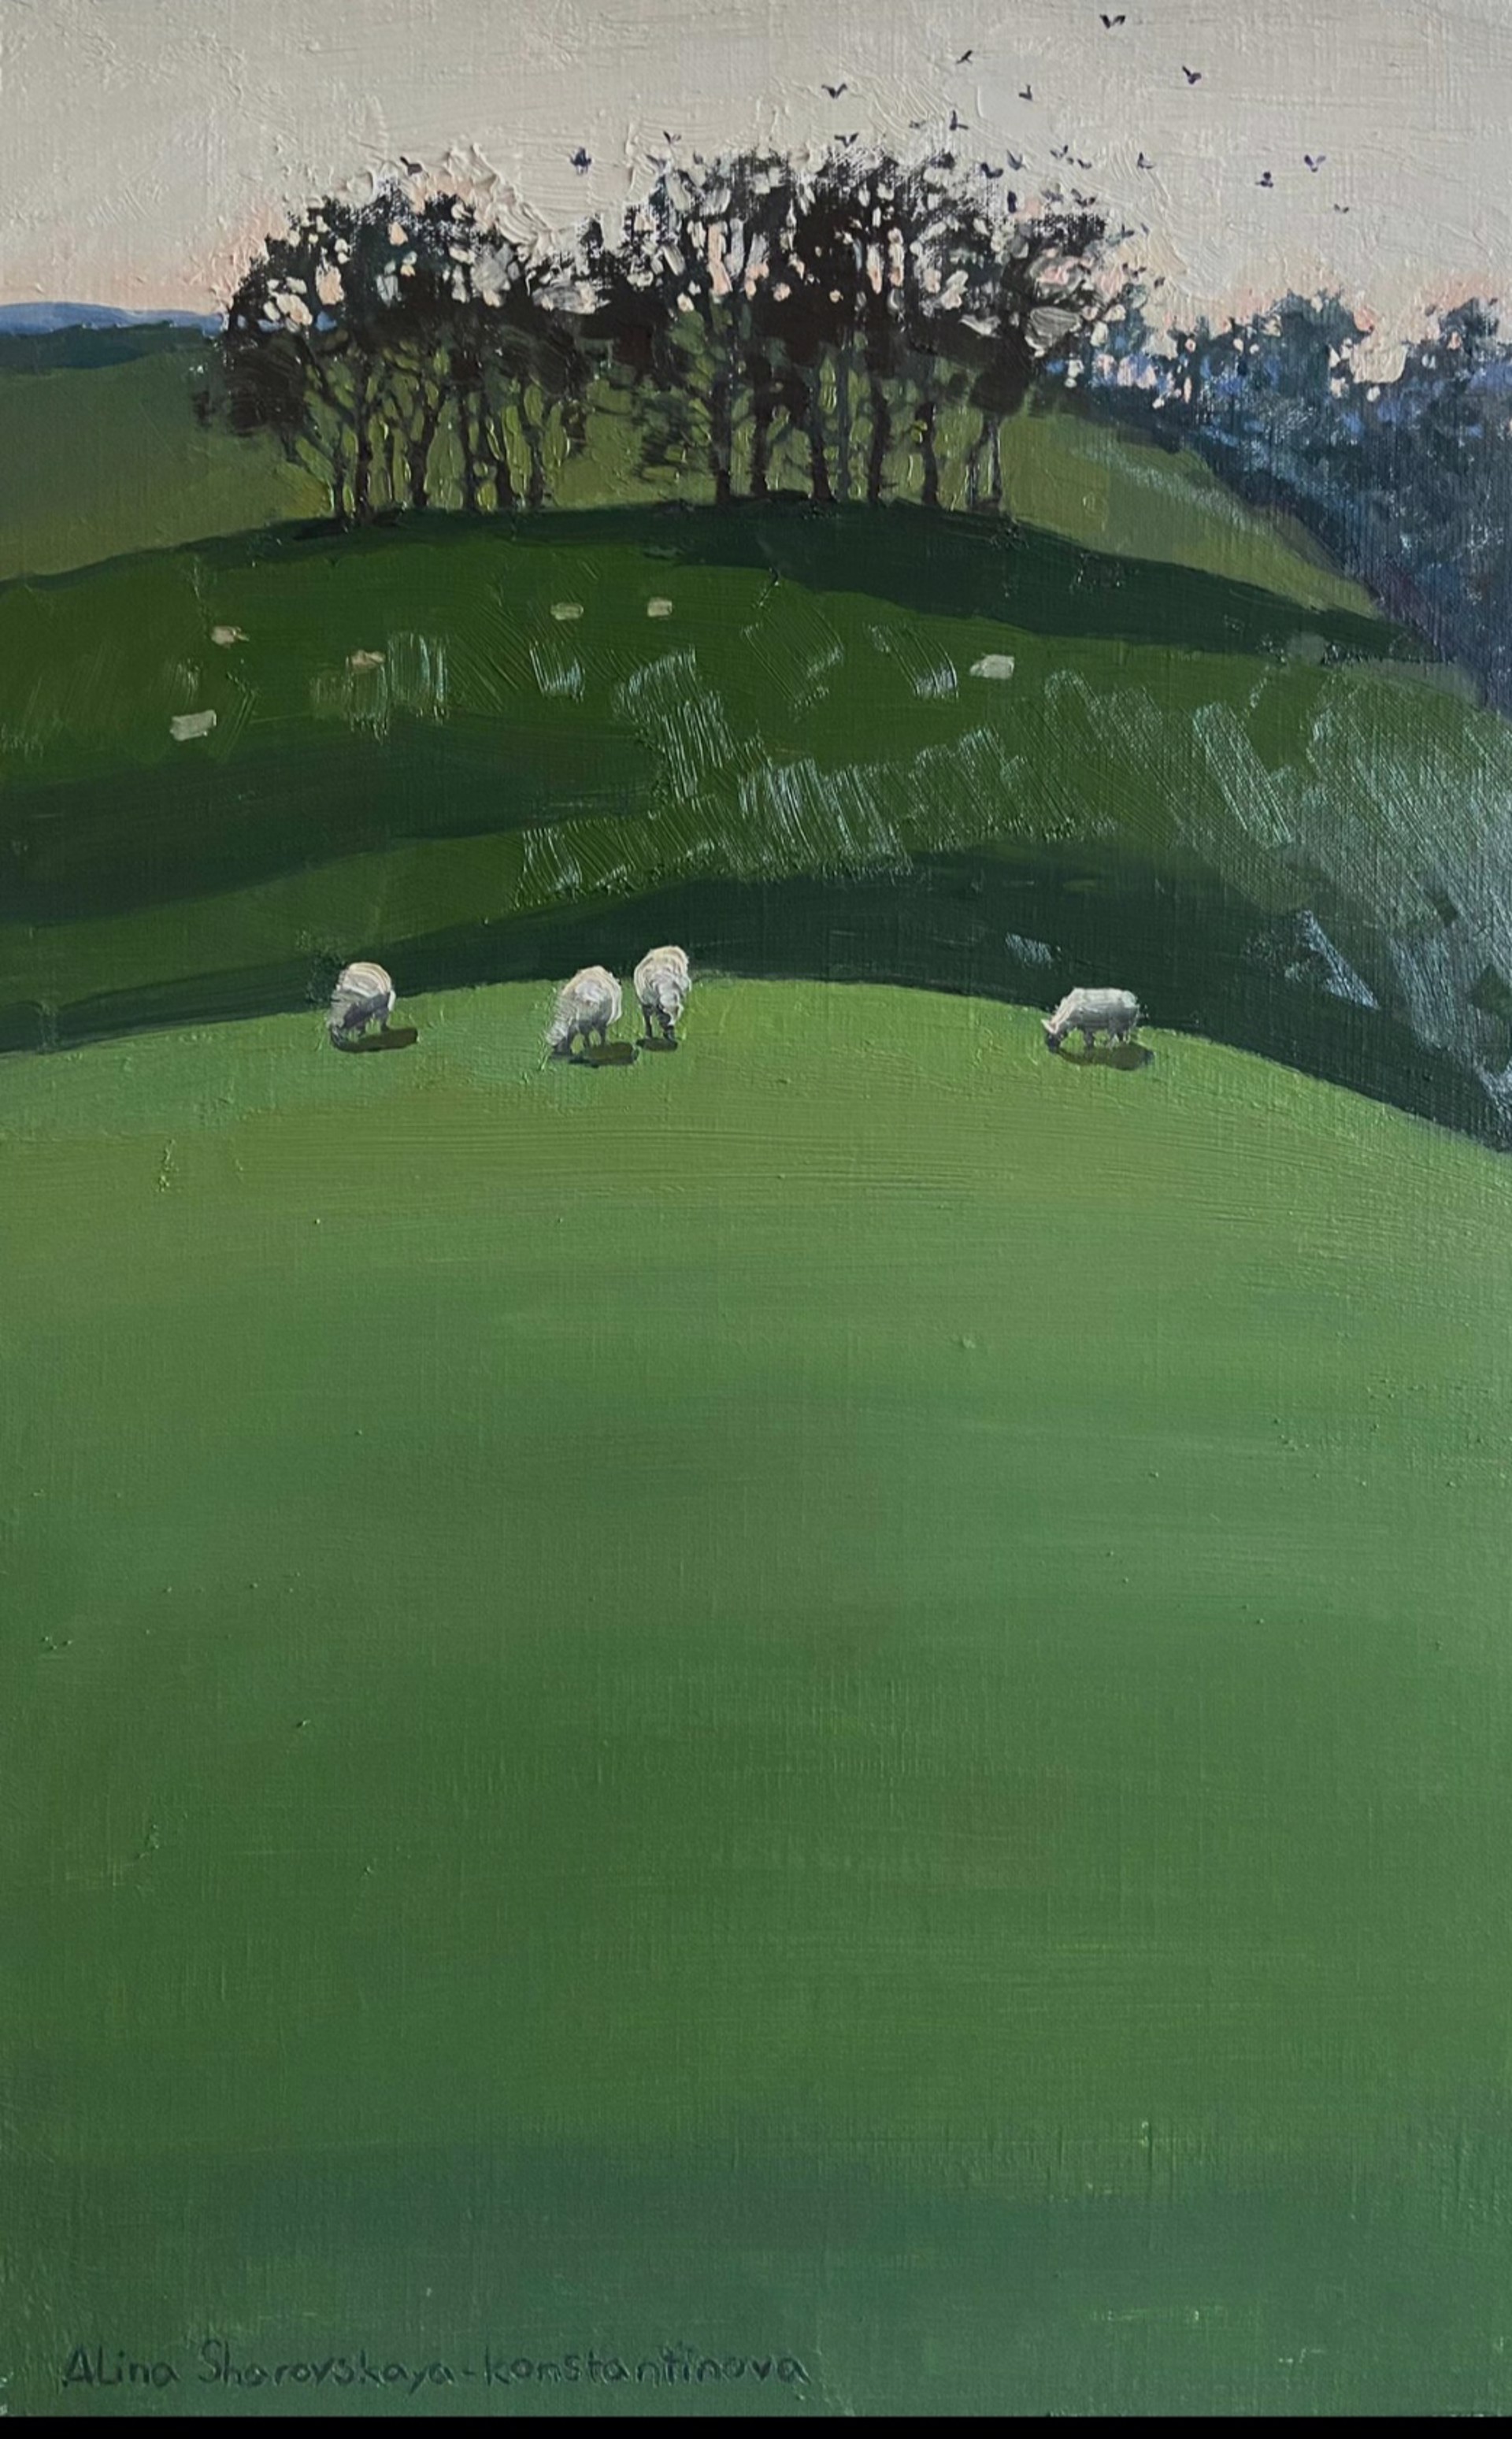 Sheep in the Meadow by Alina Sharovskaya